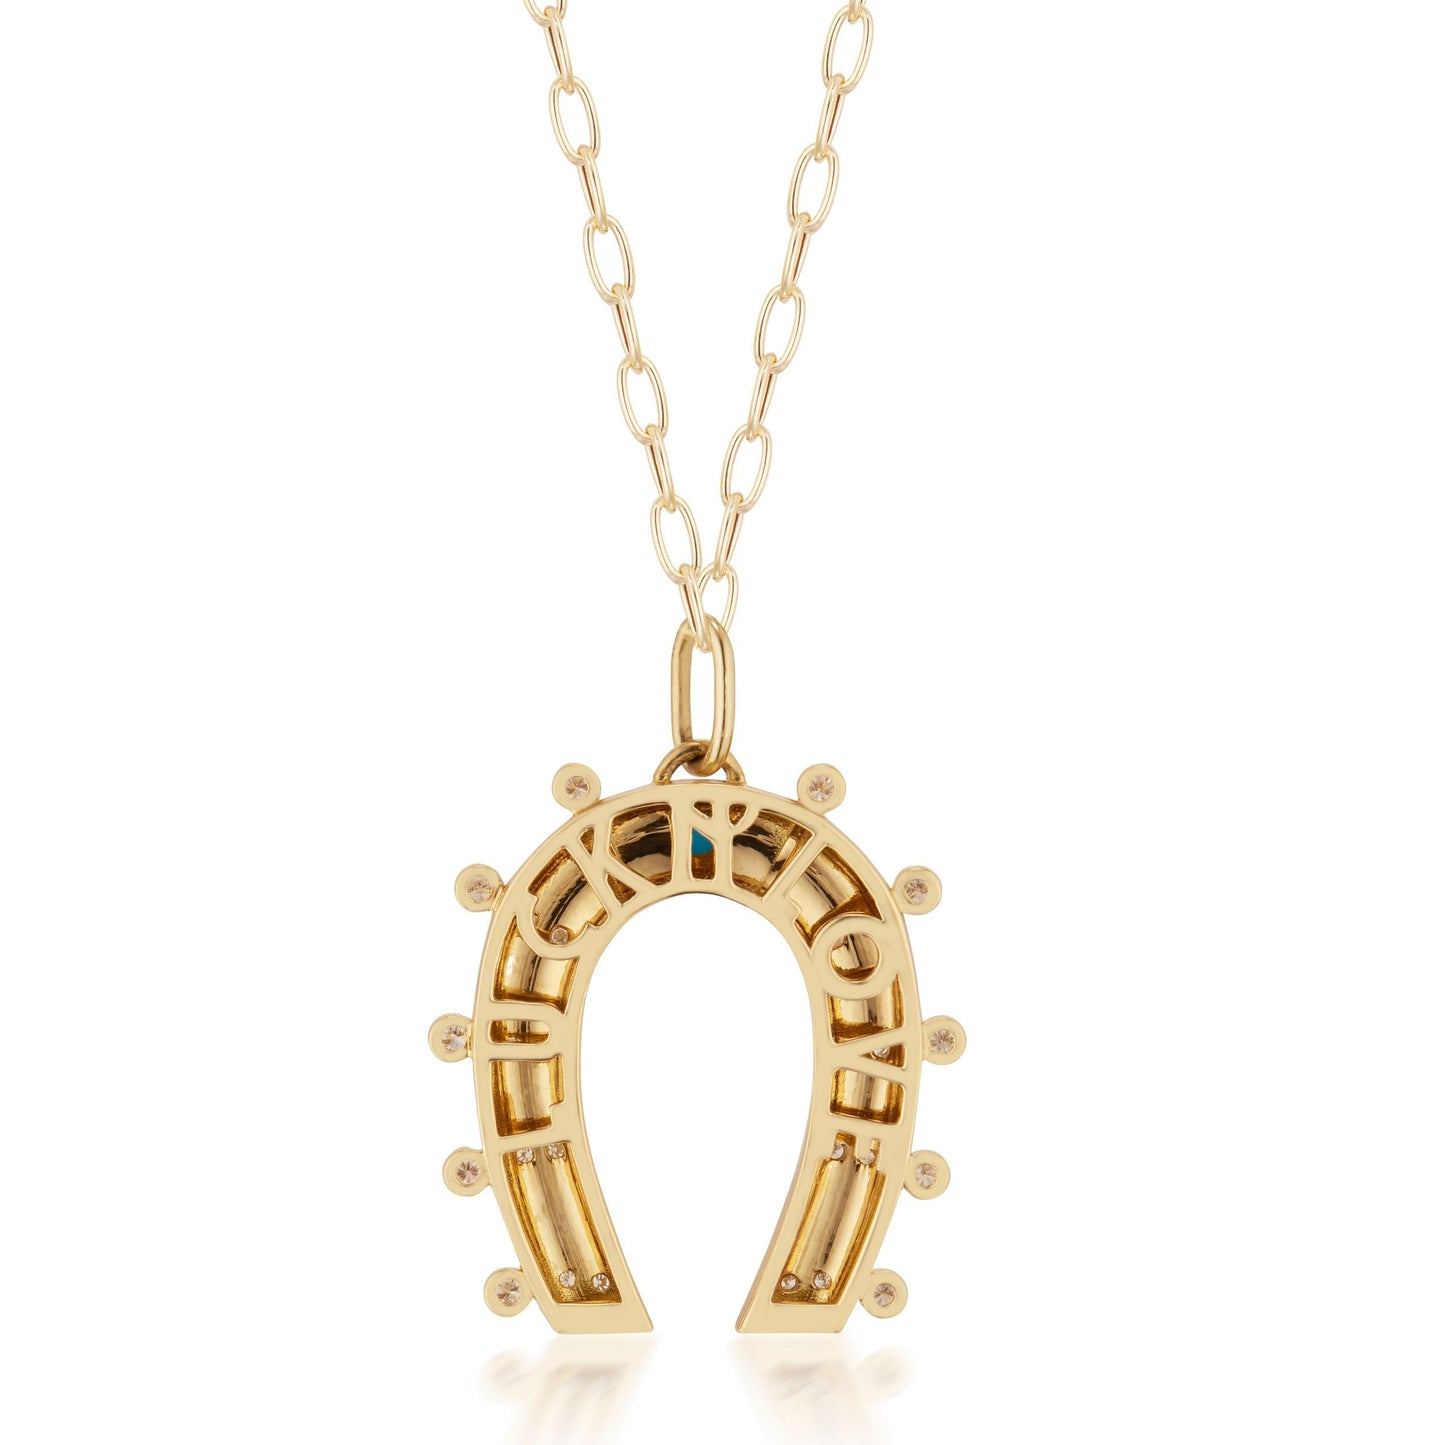 Puff Horseshoe Pendant Necklace with Turquoise and Diamonds